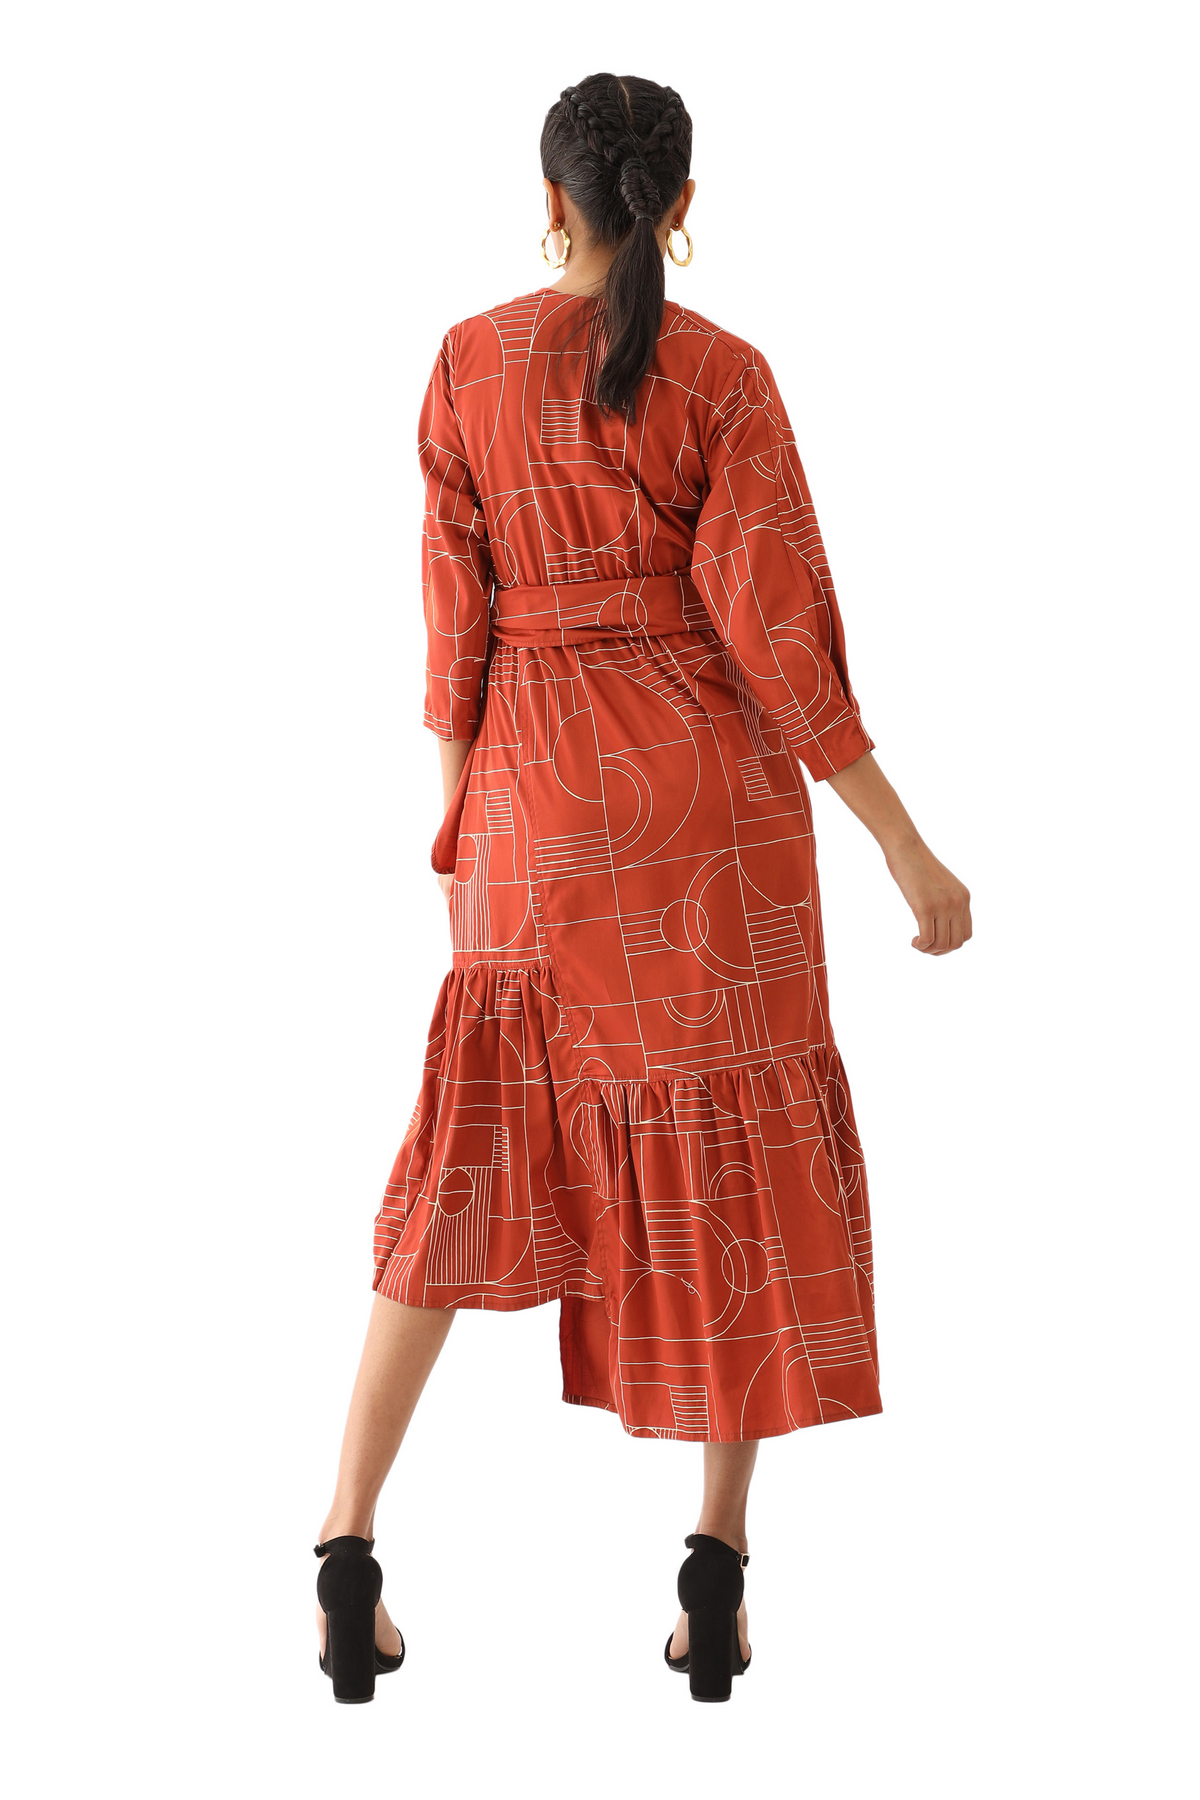 Alila - Rust Dress